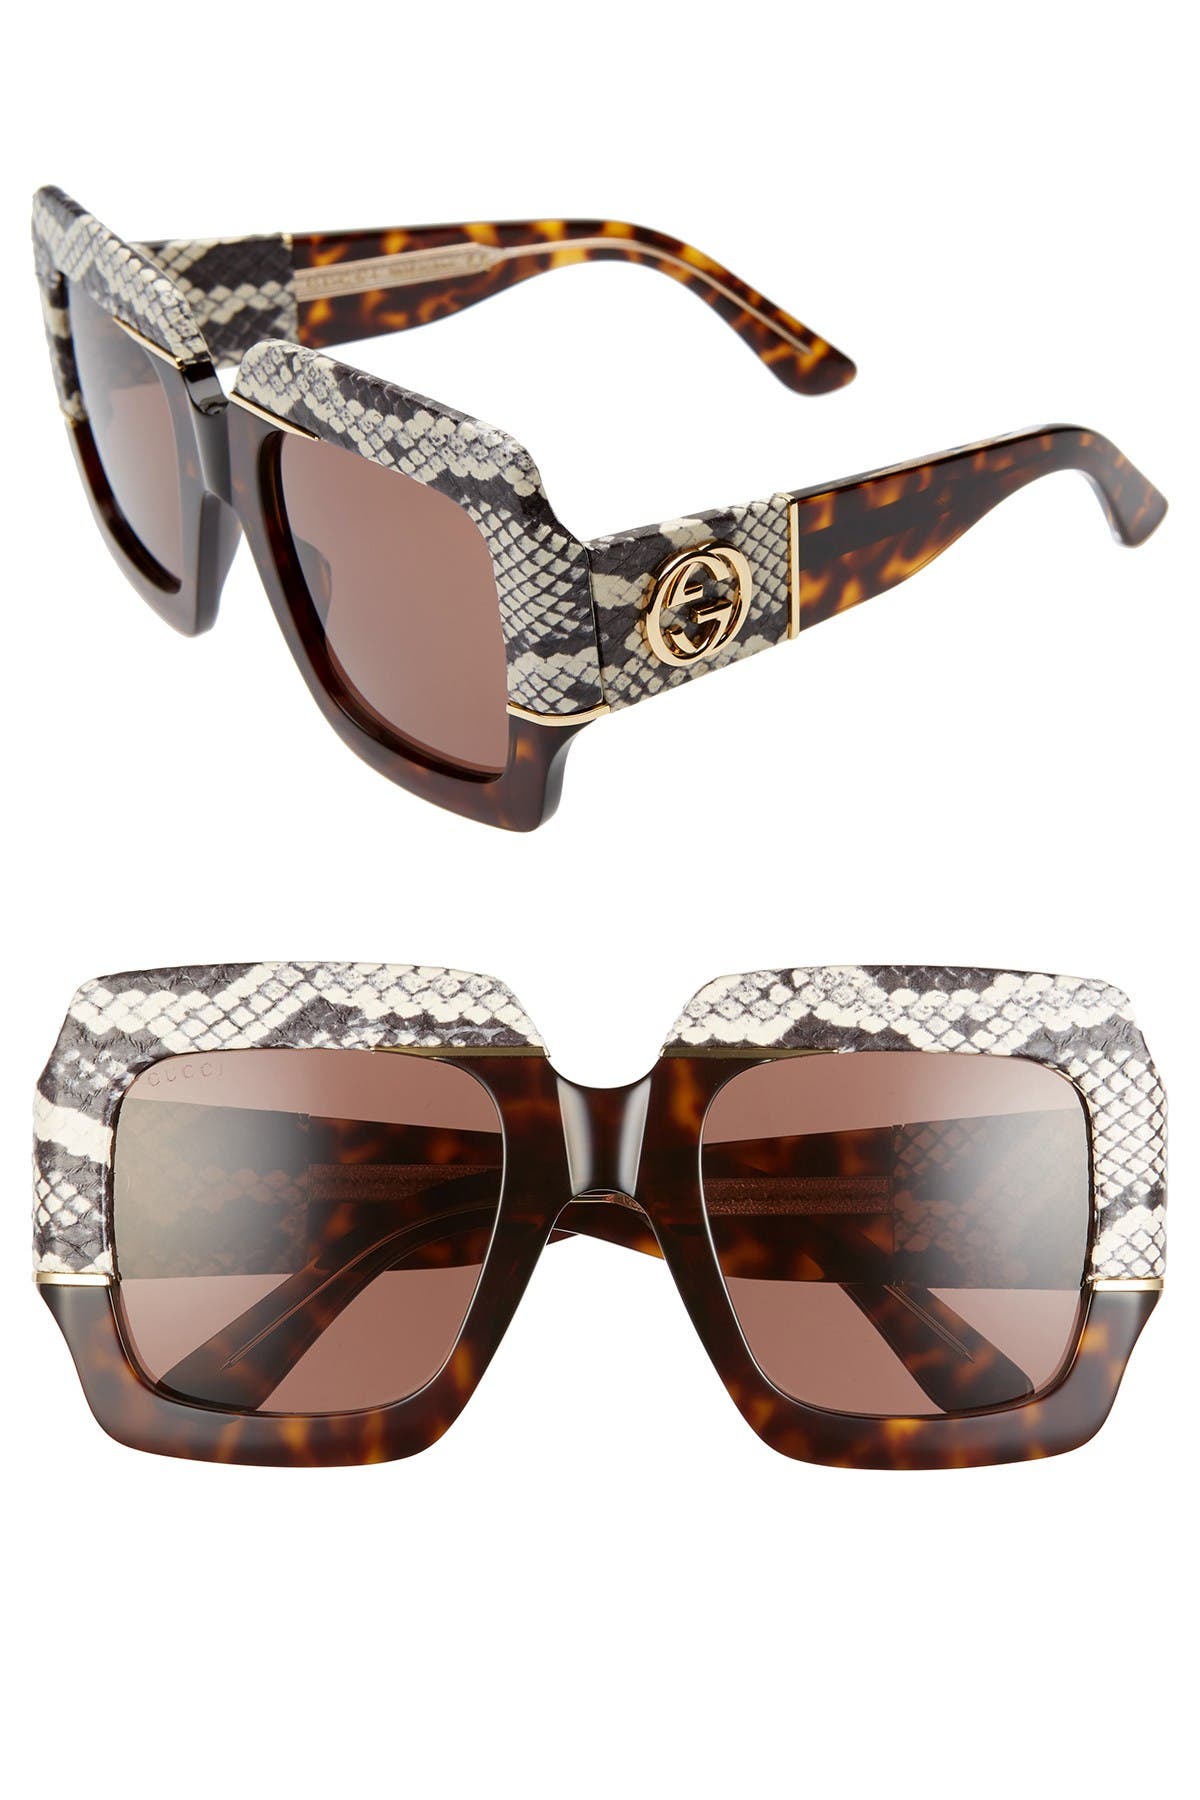 gucci snakeskin sunglasses